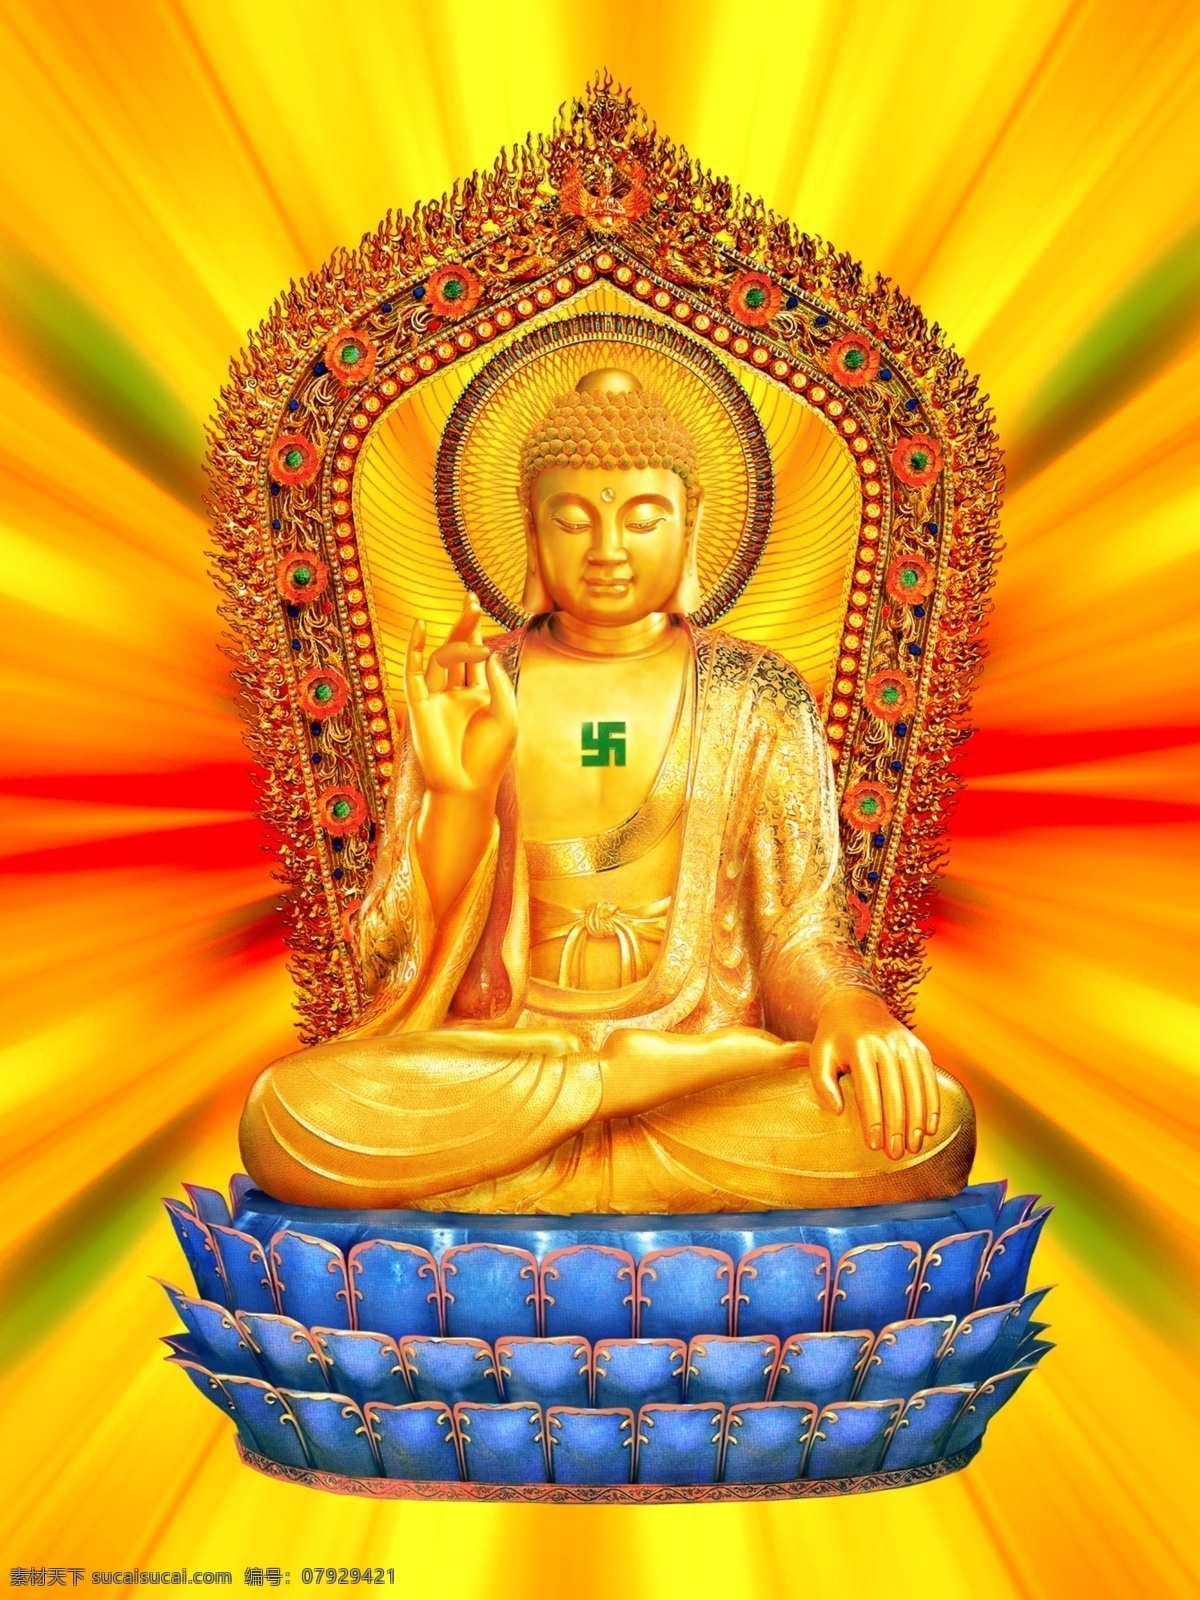 bmp 佛教 佛像 如来佛祖 文化艺术 宗教信仰 释迦牟尼 佛 设计素材 模板下载 释迦牟尼佛 佛画 佛教艺术